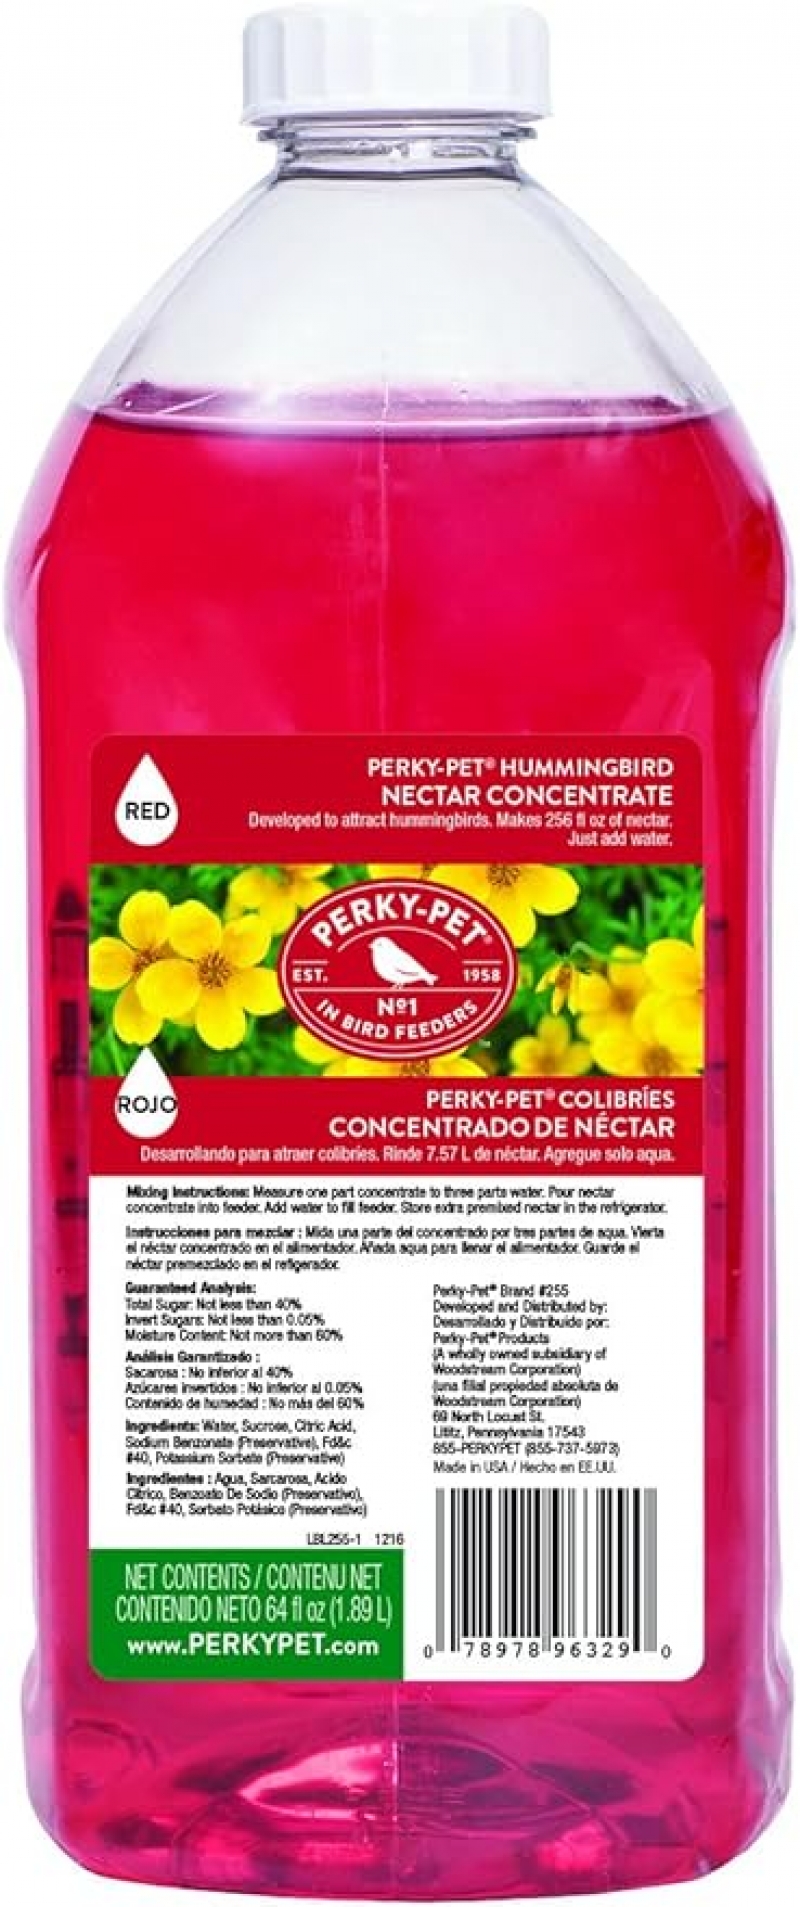 ihocon: Perky-Pet 255 Hummingbird Nectar Liquid Concentrate - Makes 256 Oz of Hummingbird Nectar 浓缩蜂鸟花蜜 64 Oz (可稀释成 256 oz 蜂鸟花蜜)